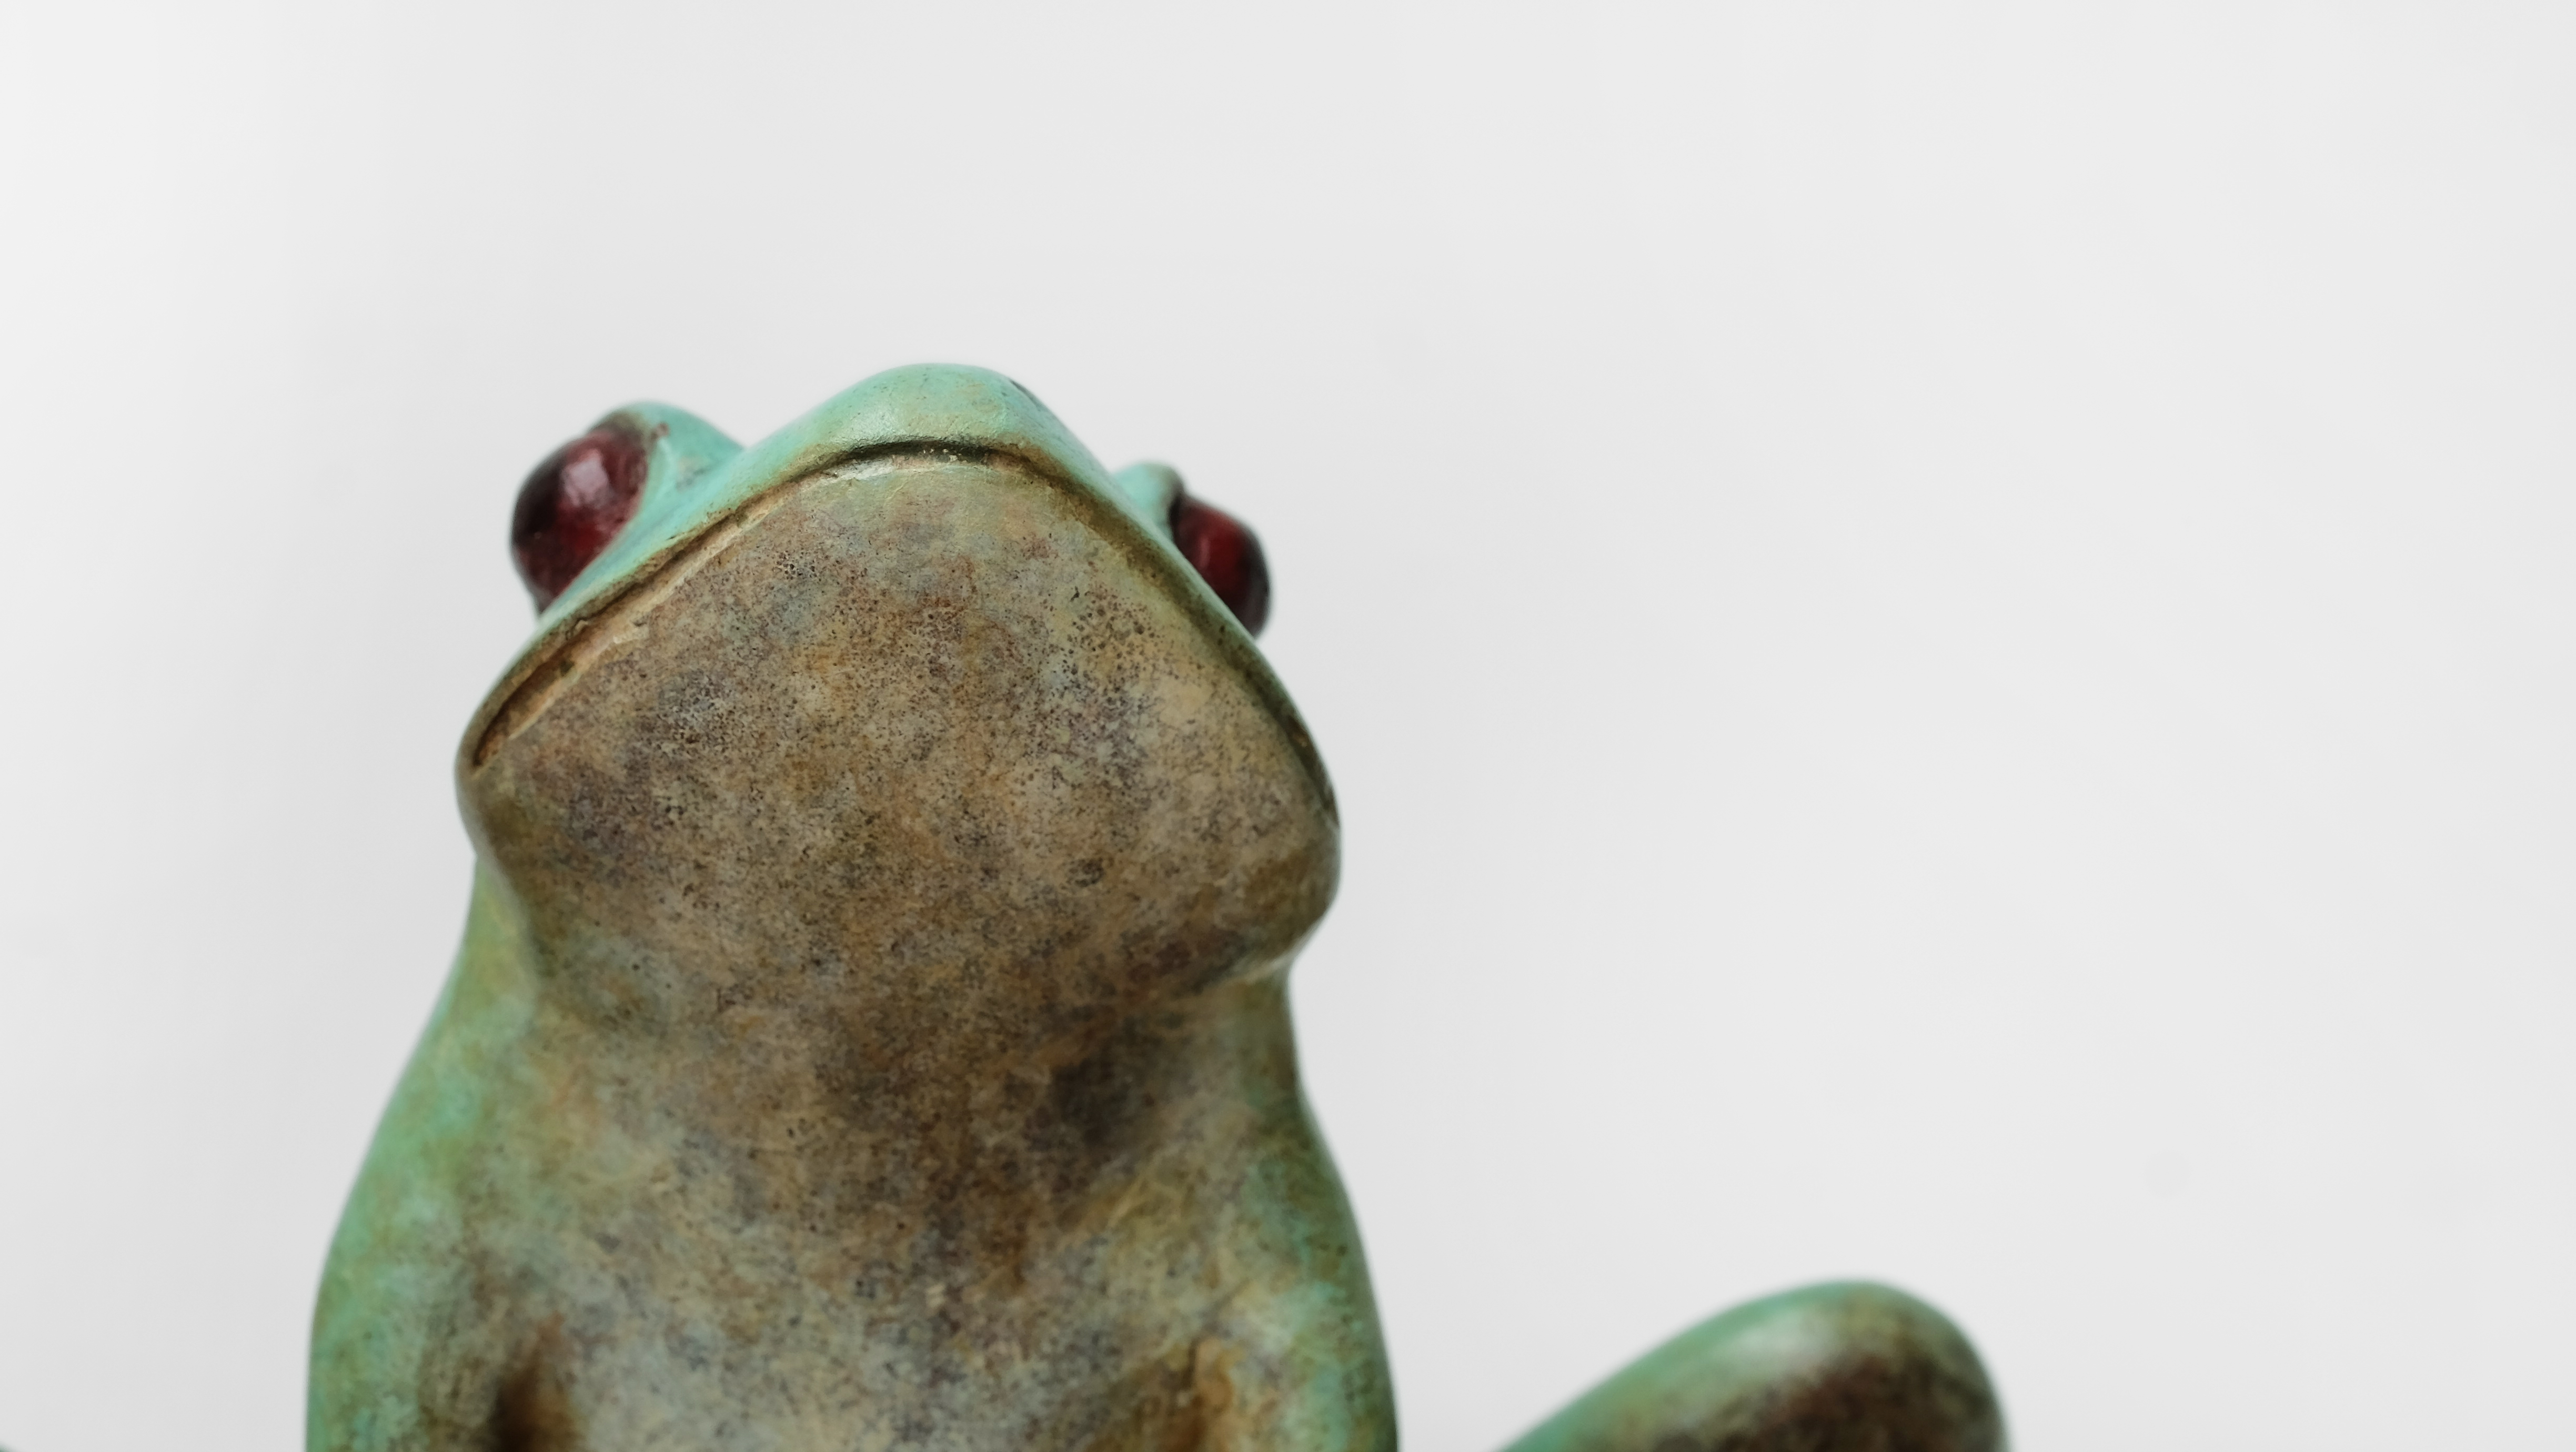 Frog Copper Art Installation 4896x2760